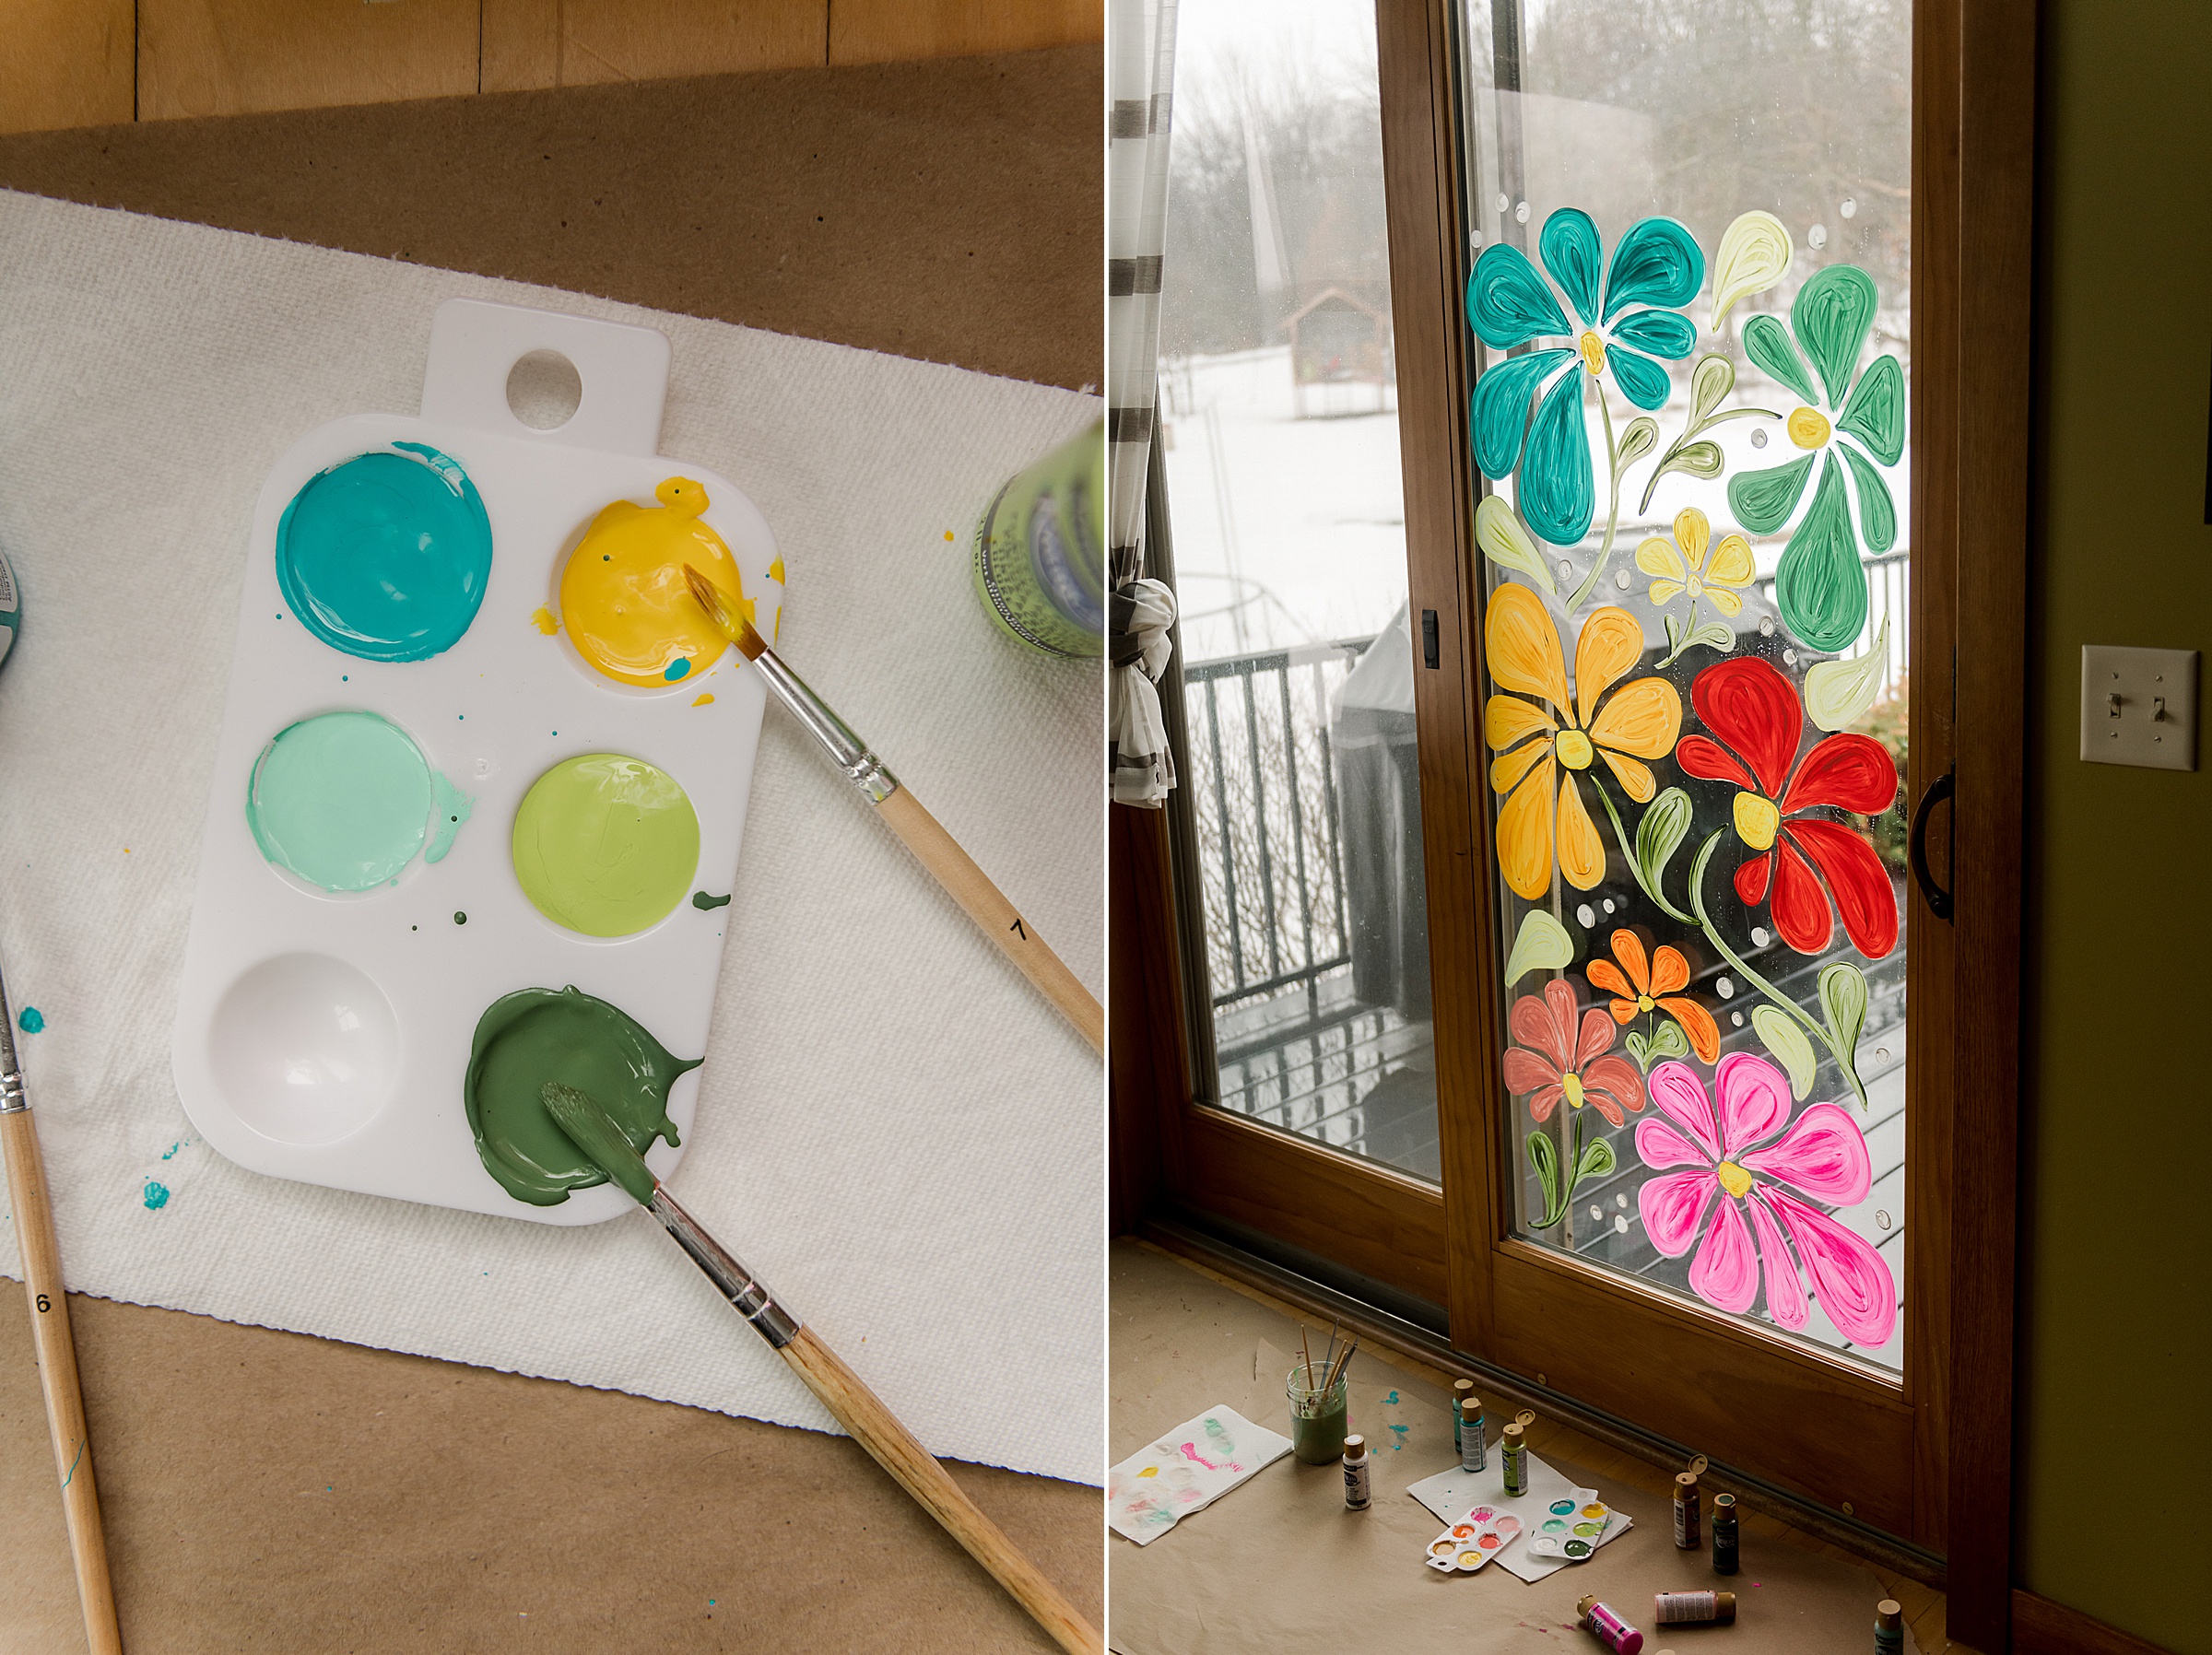 How to a paint on interior windows, Acrylic painted windows, How to use acrylic paint to paint on windows, painting on home windows, what paint to use on windows